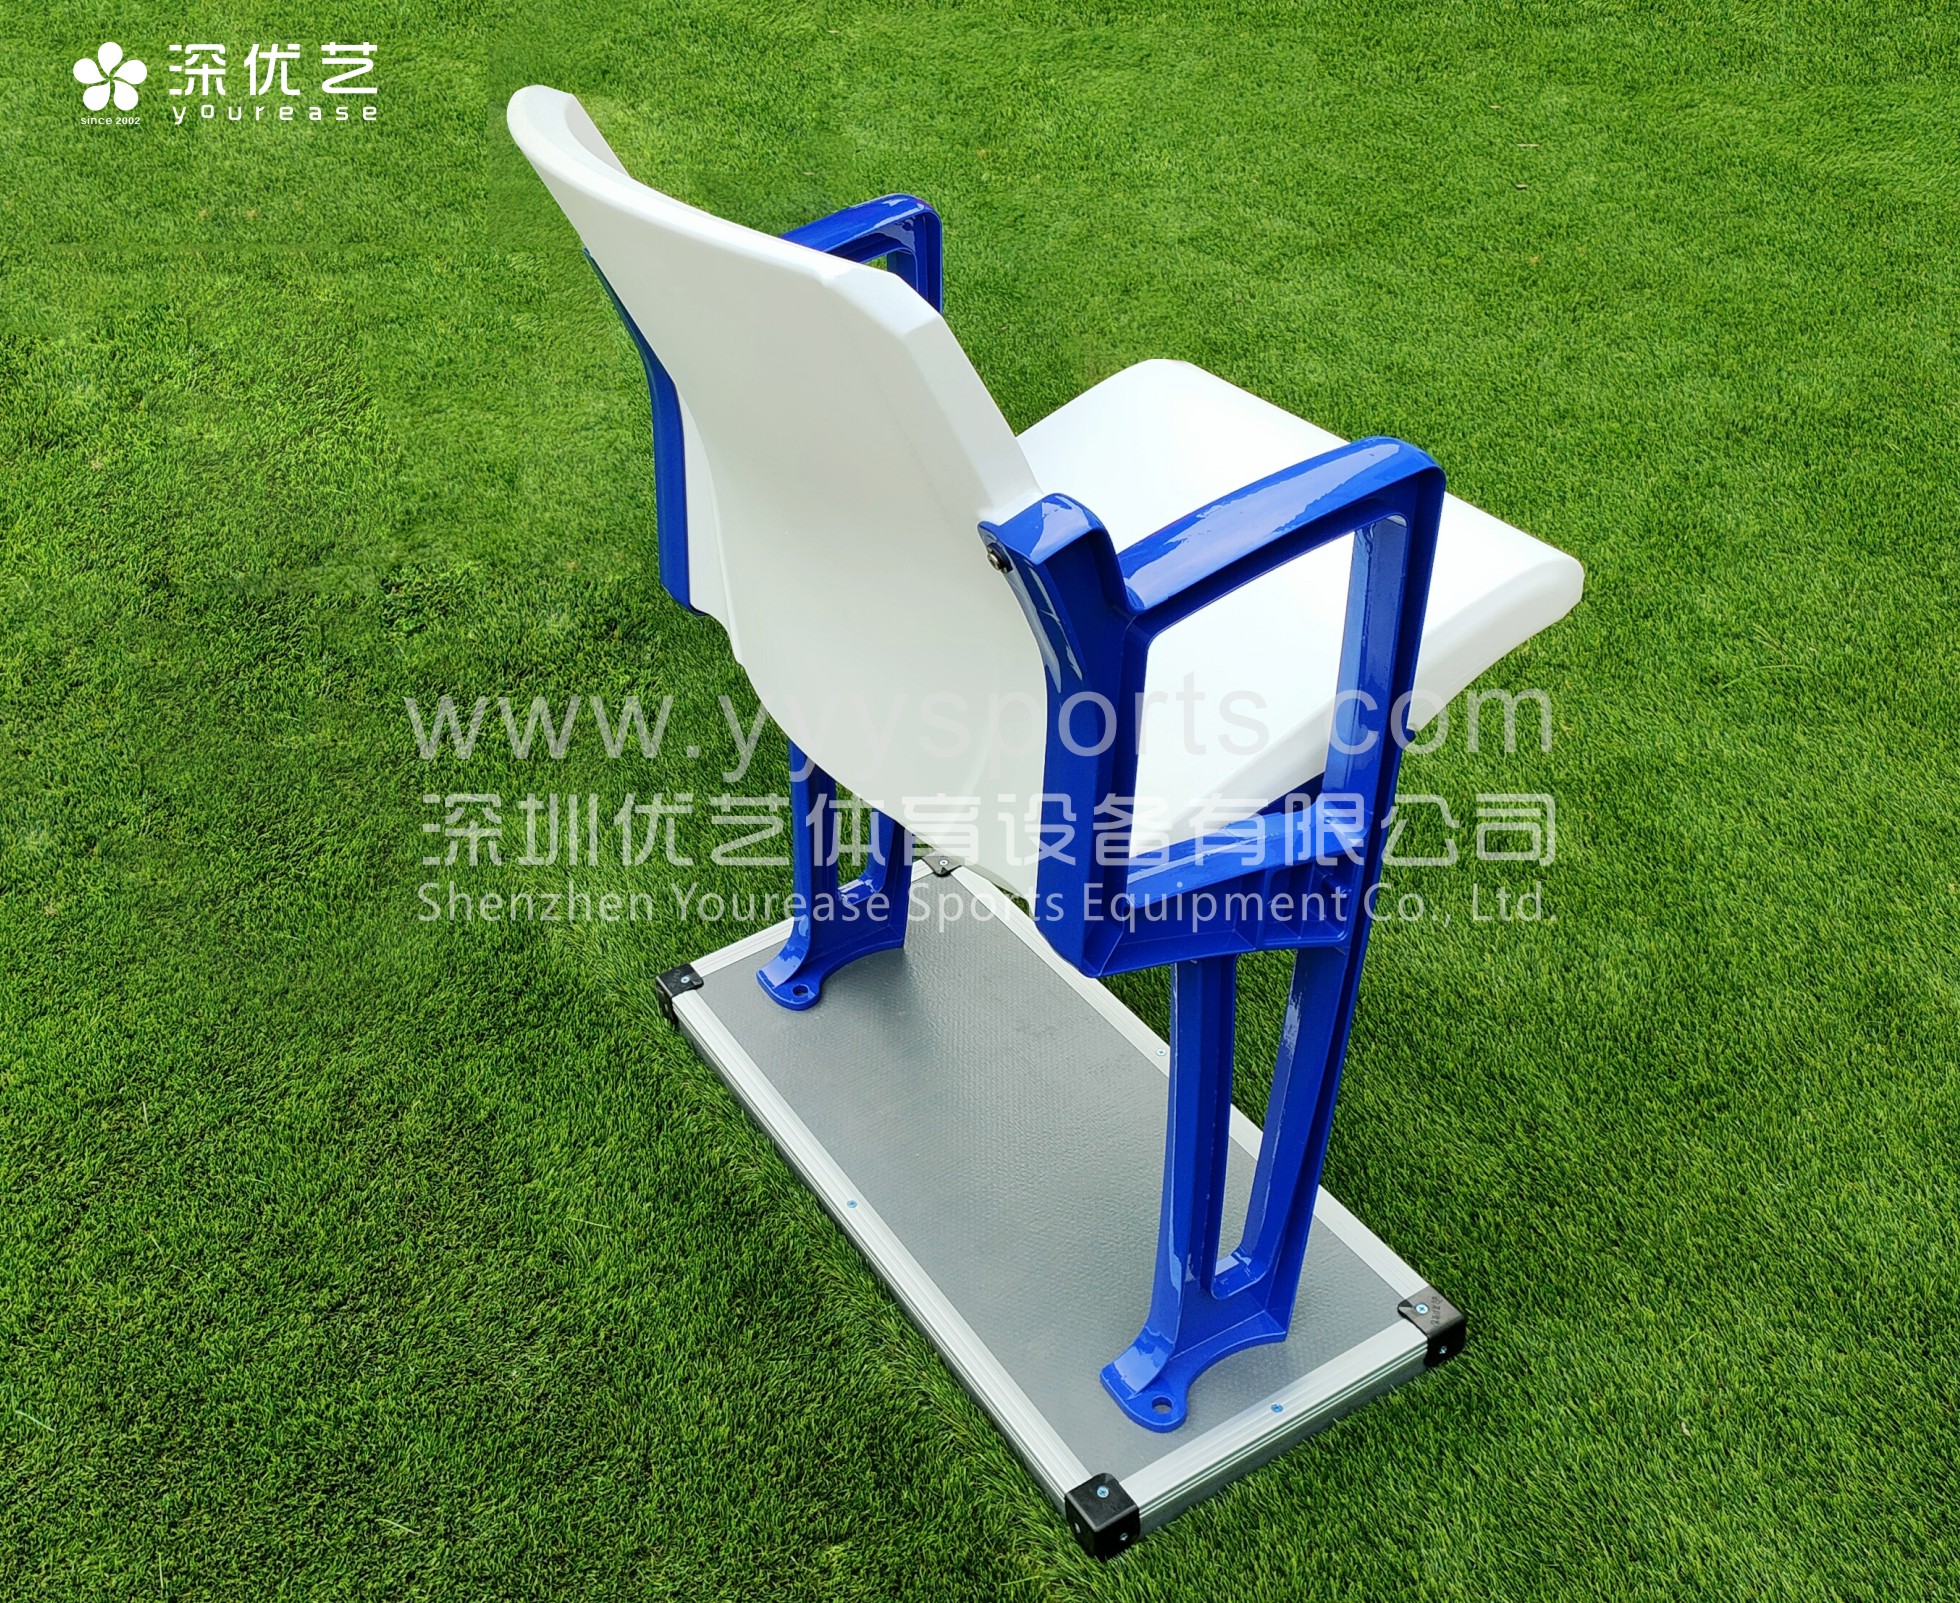 Yourease Football Plastic Chair Stadium Price Featured Image